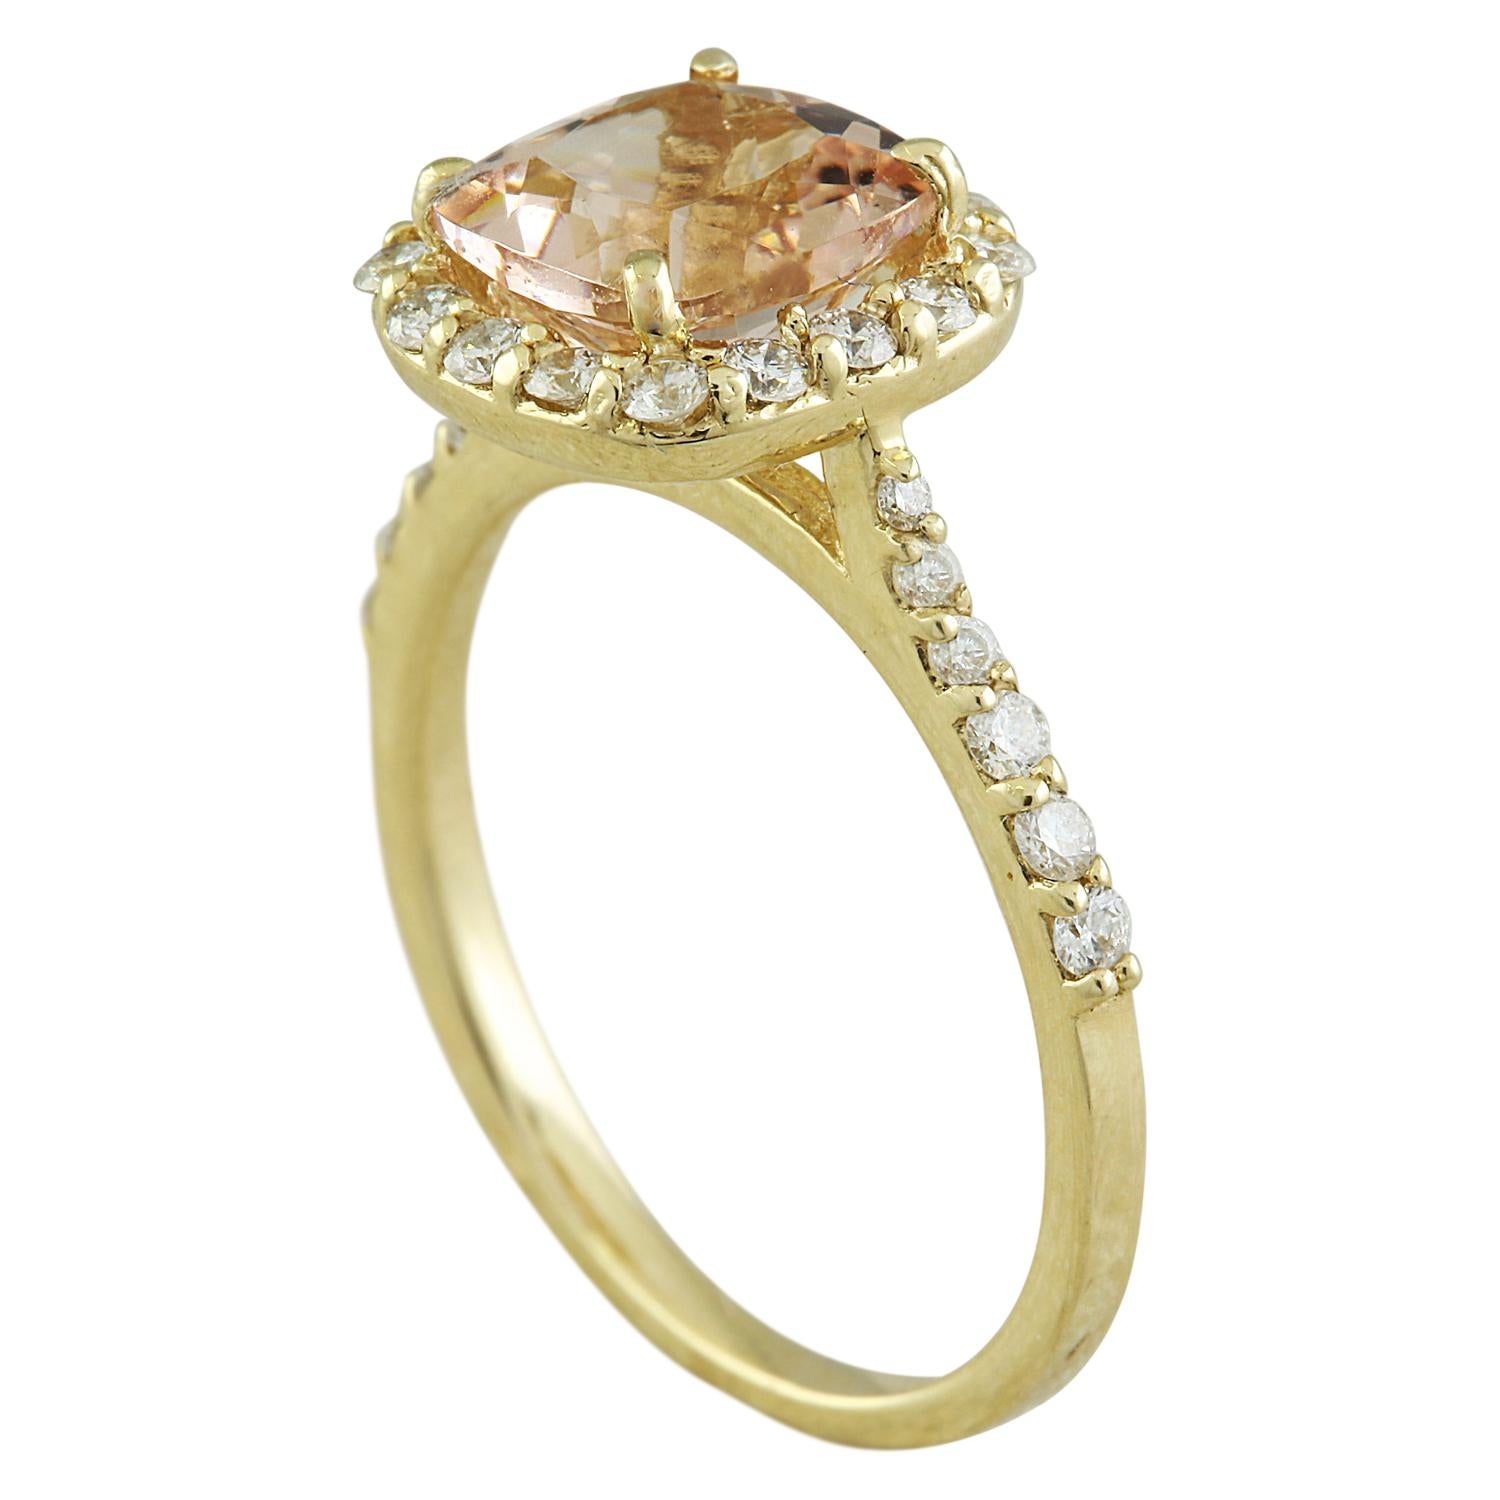 2.32 Carat Natural Morganite 14 Karat Solid Yellow Gold Diamond Ring
Stamped: 14K 
Total Ring Weight: 3 Grams 
Morganite Weight: 1.82 Carat (7.50x7.50 Millimeters)  
Diamond Weight: 0.50 Carat (F-G Color, VS2-SI1 Clarity )
Quantity: 28
Face